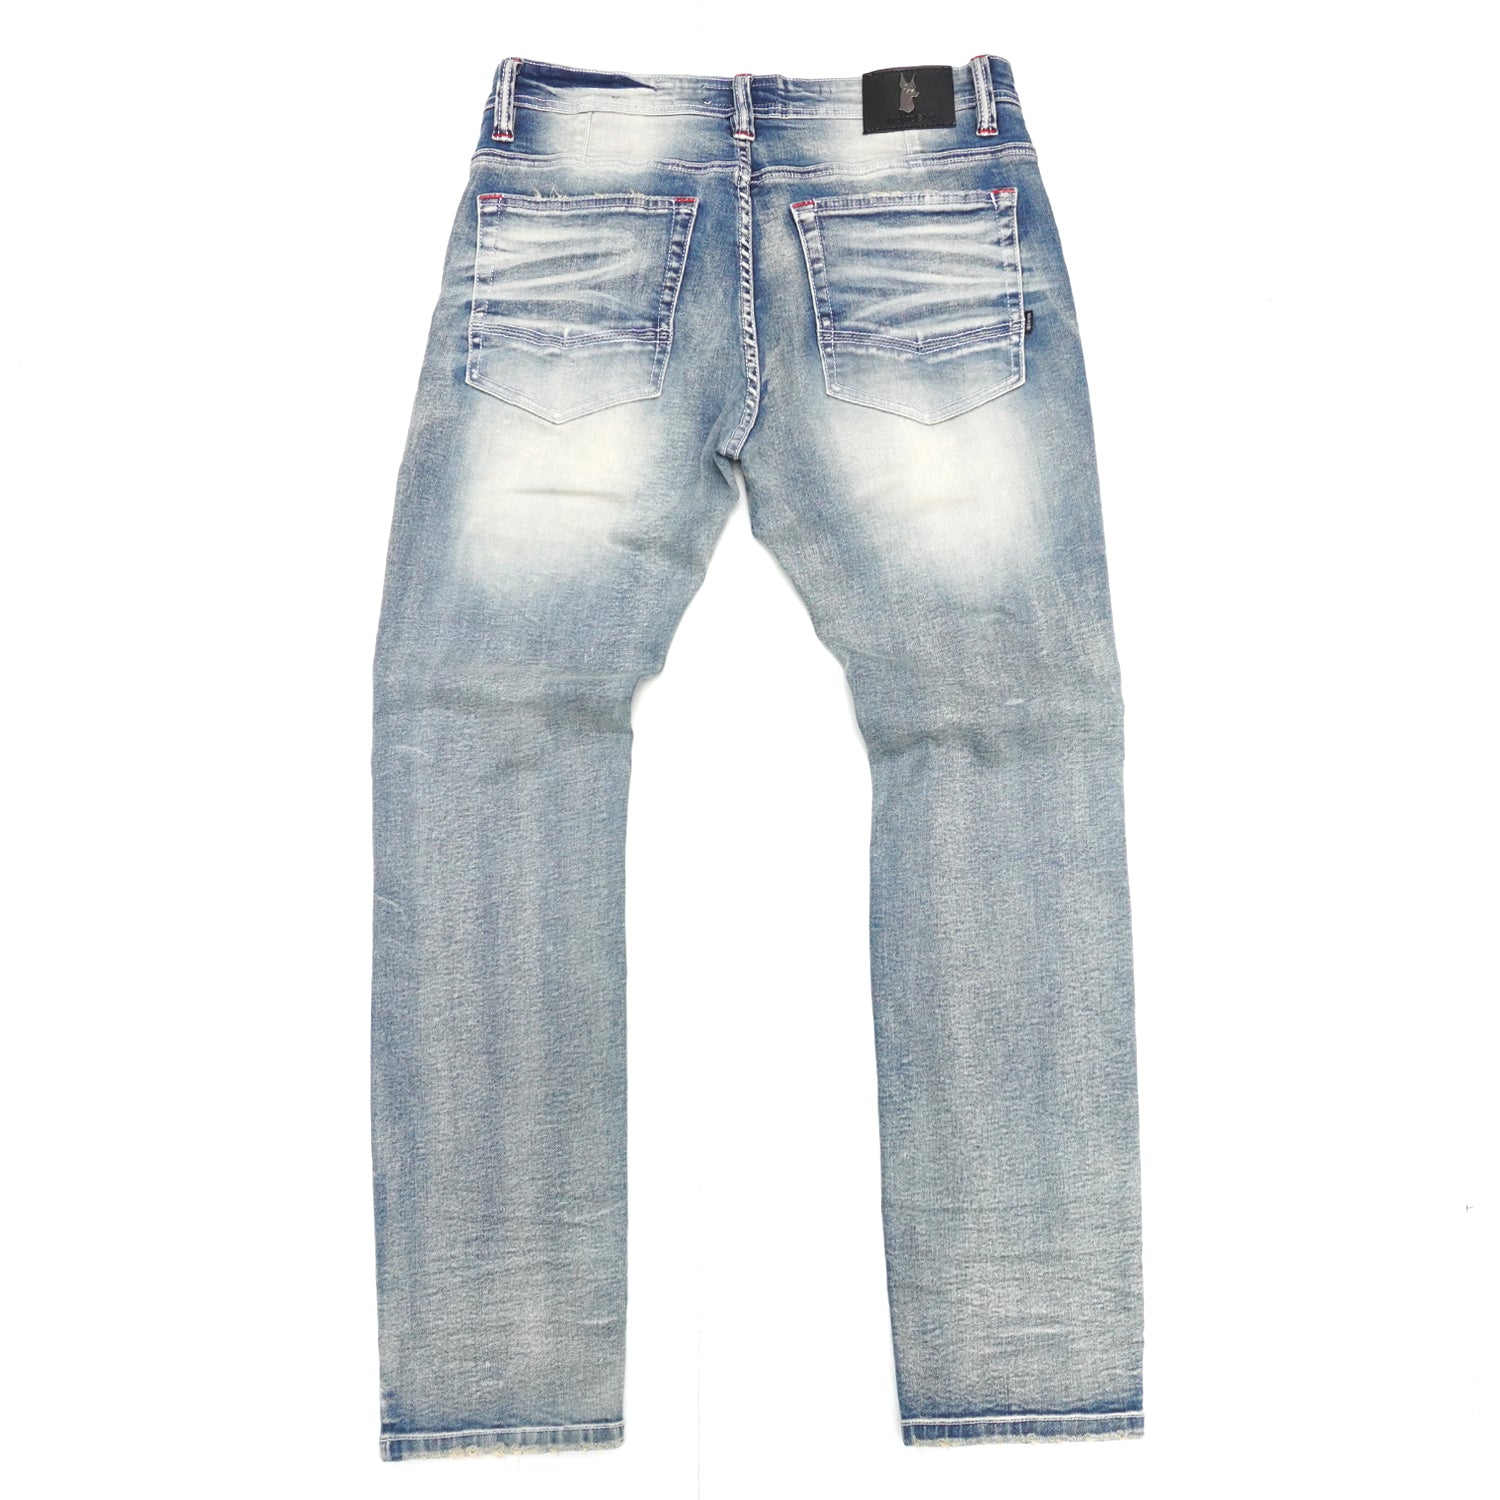 M1990 Leaders Denim Jeans - Light Wash – Makobi Jeans USA